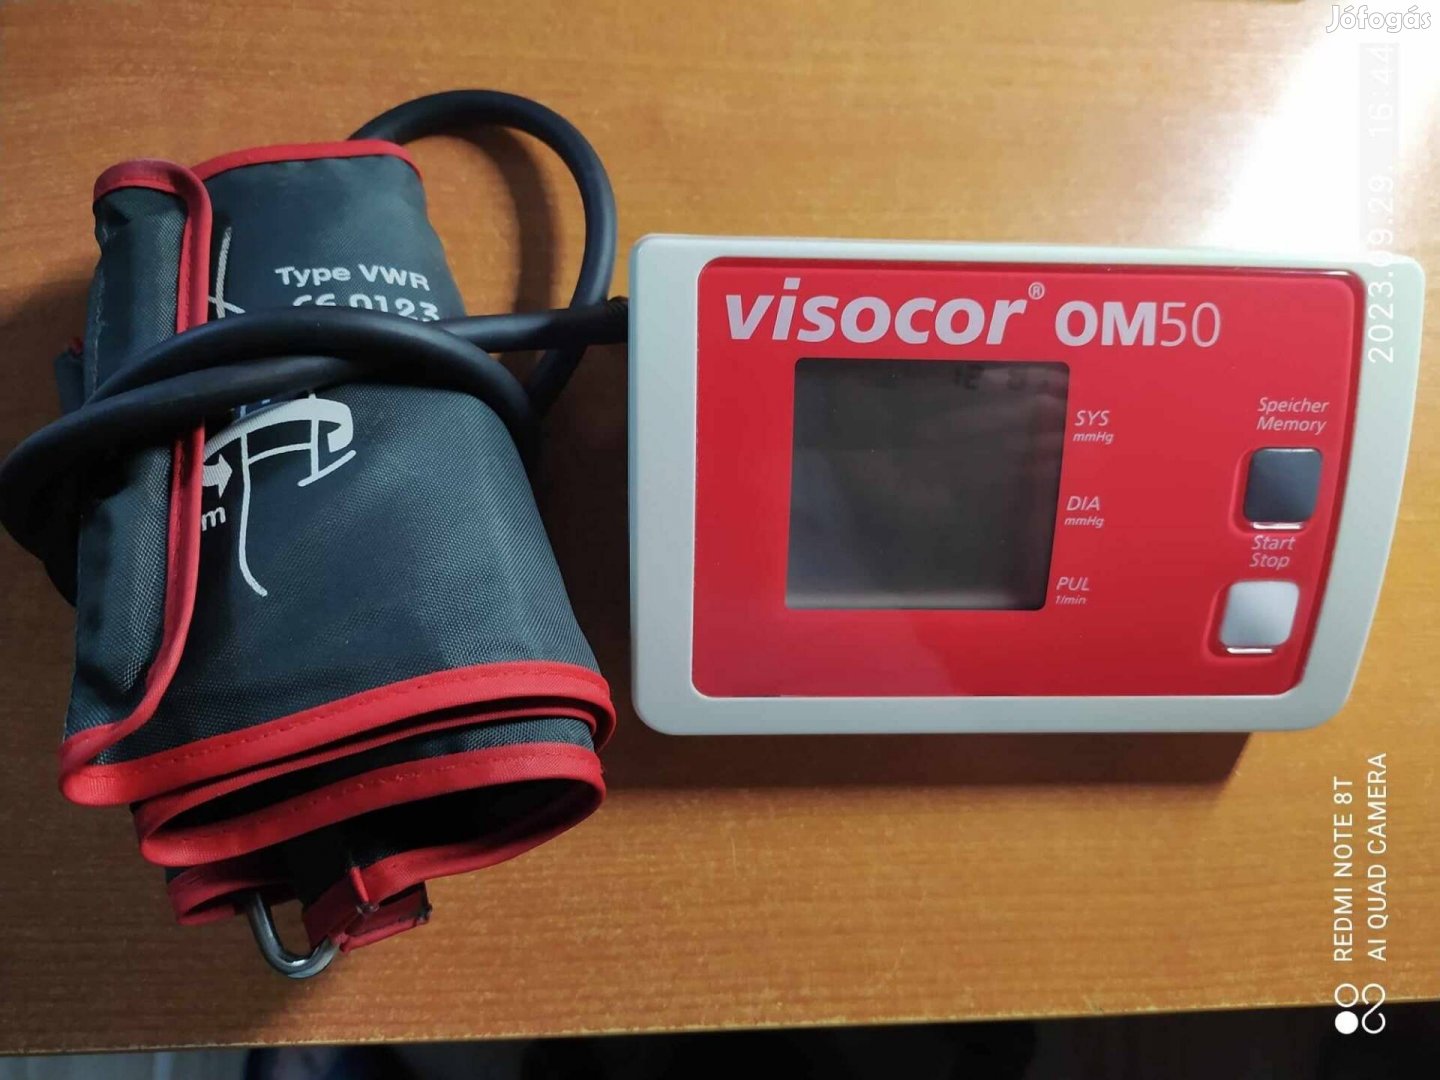 Visocor OM50 vérnyomásmérő eladó.